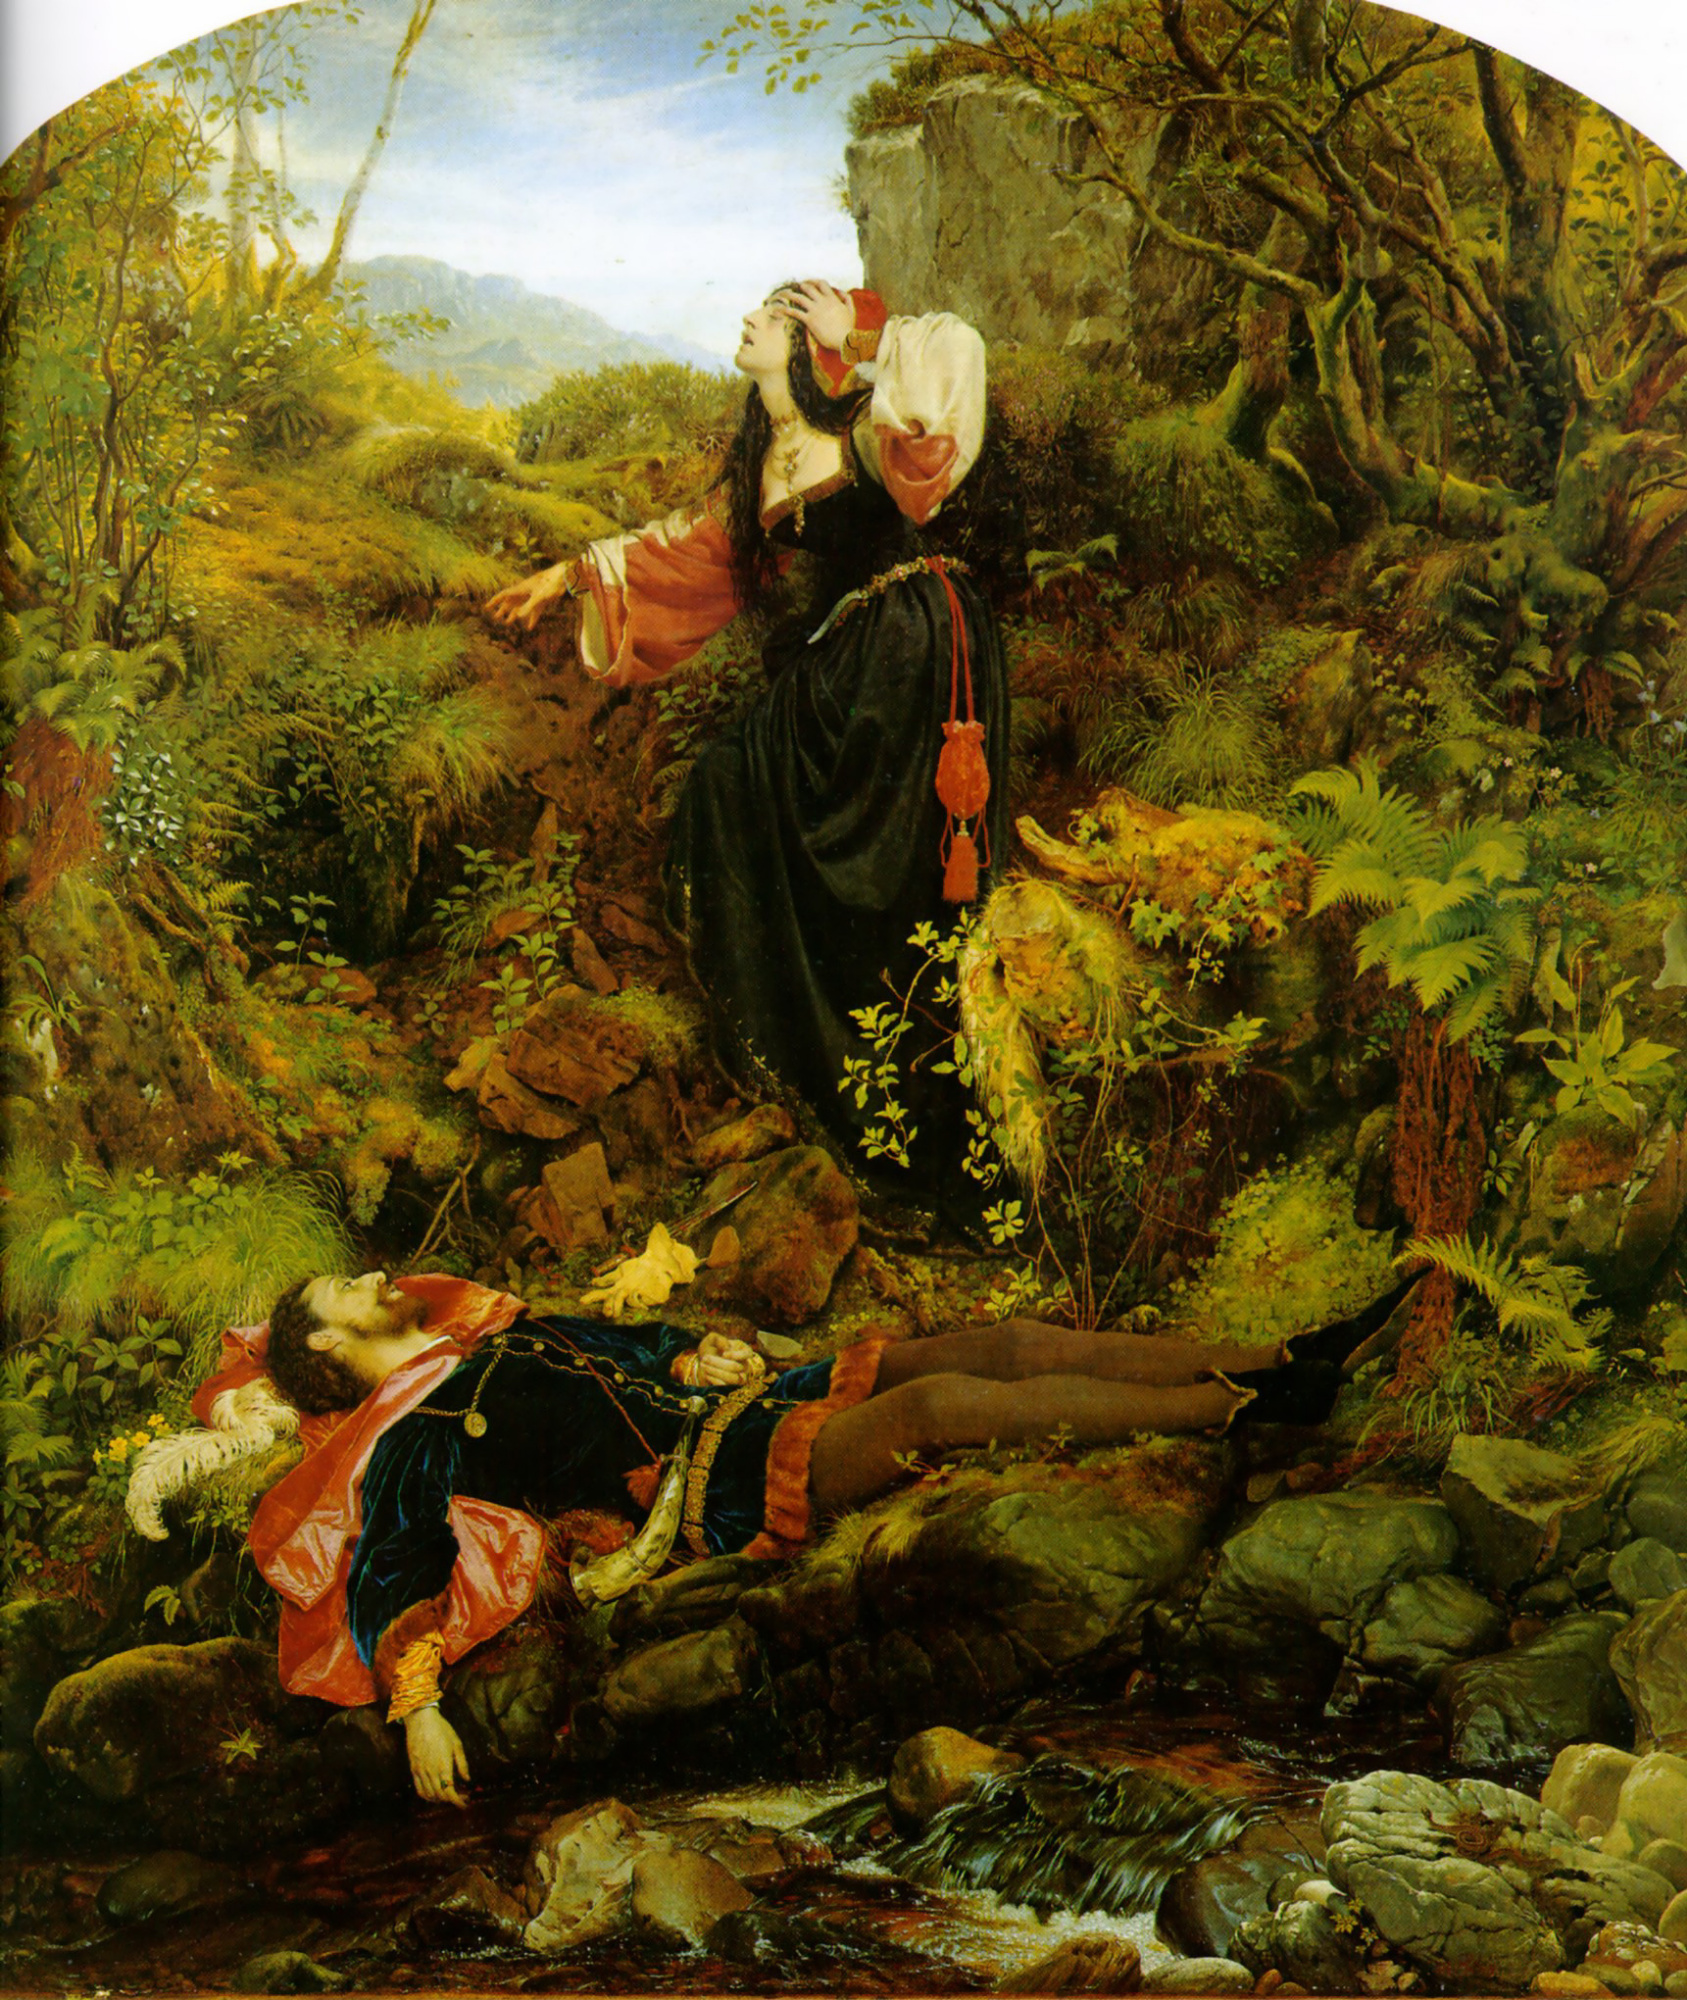 6. The Quarrel of Oberon and Titania – Joseph Noel Paton